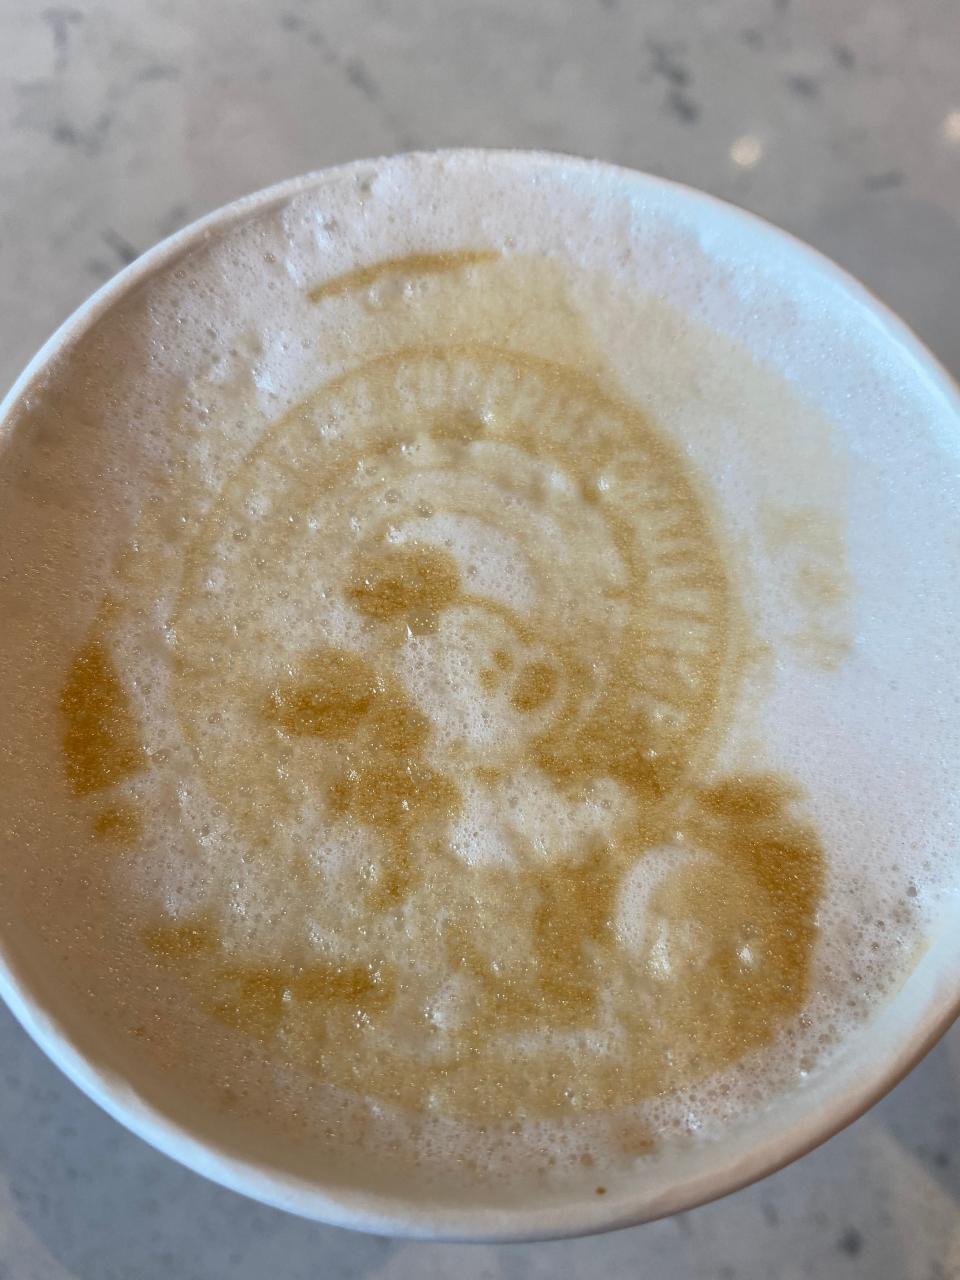 latte with disney marathon medal in latte art on top from joffrey's